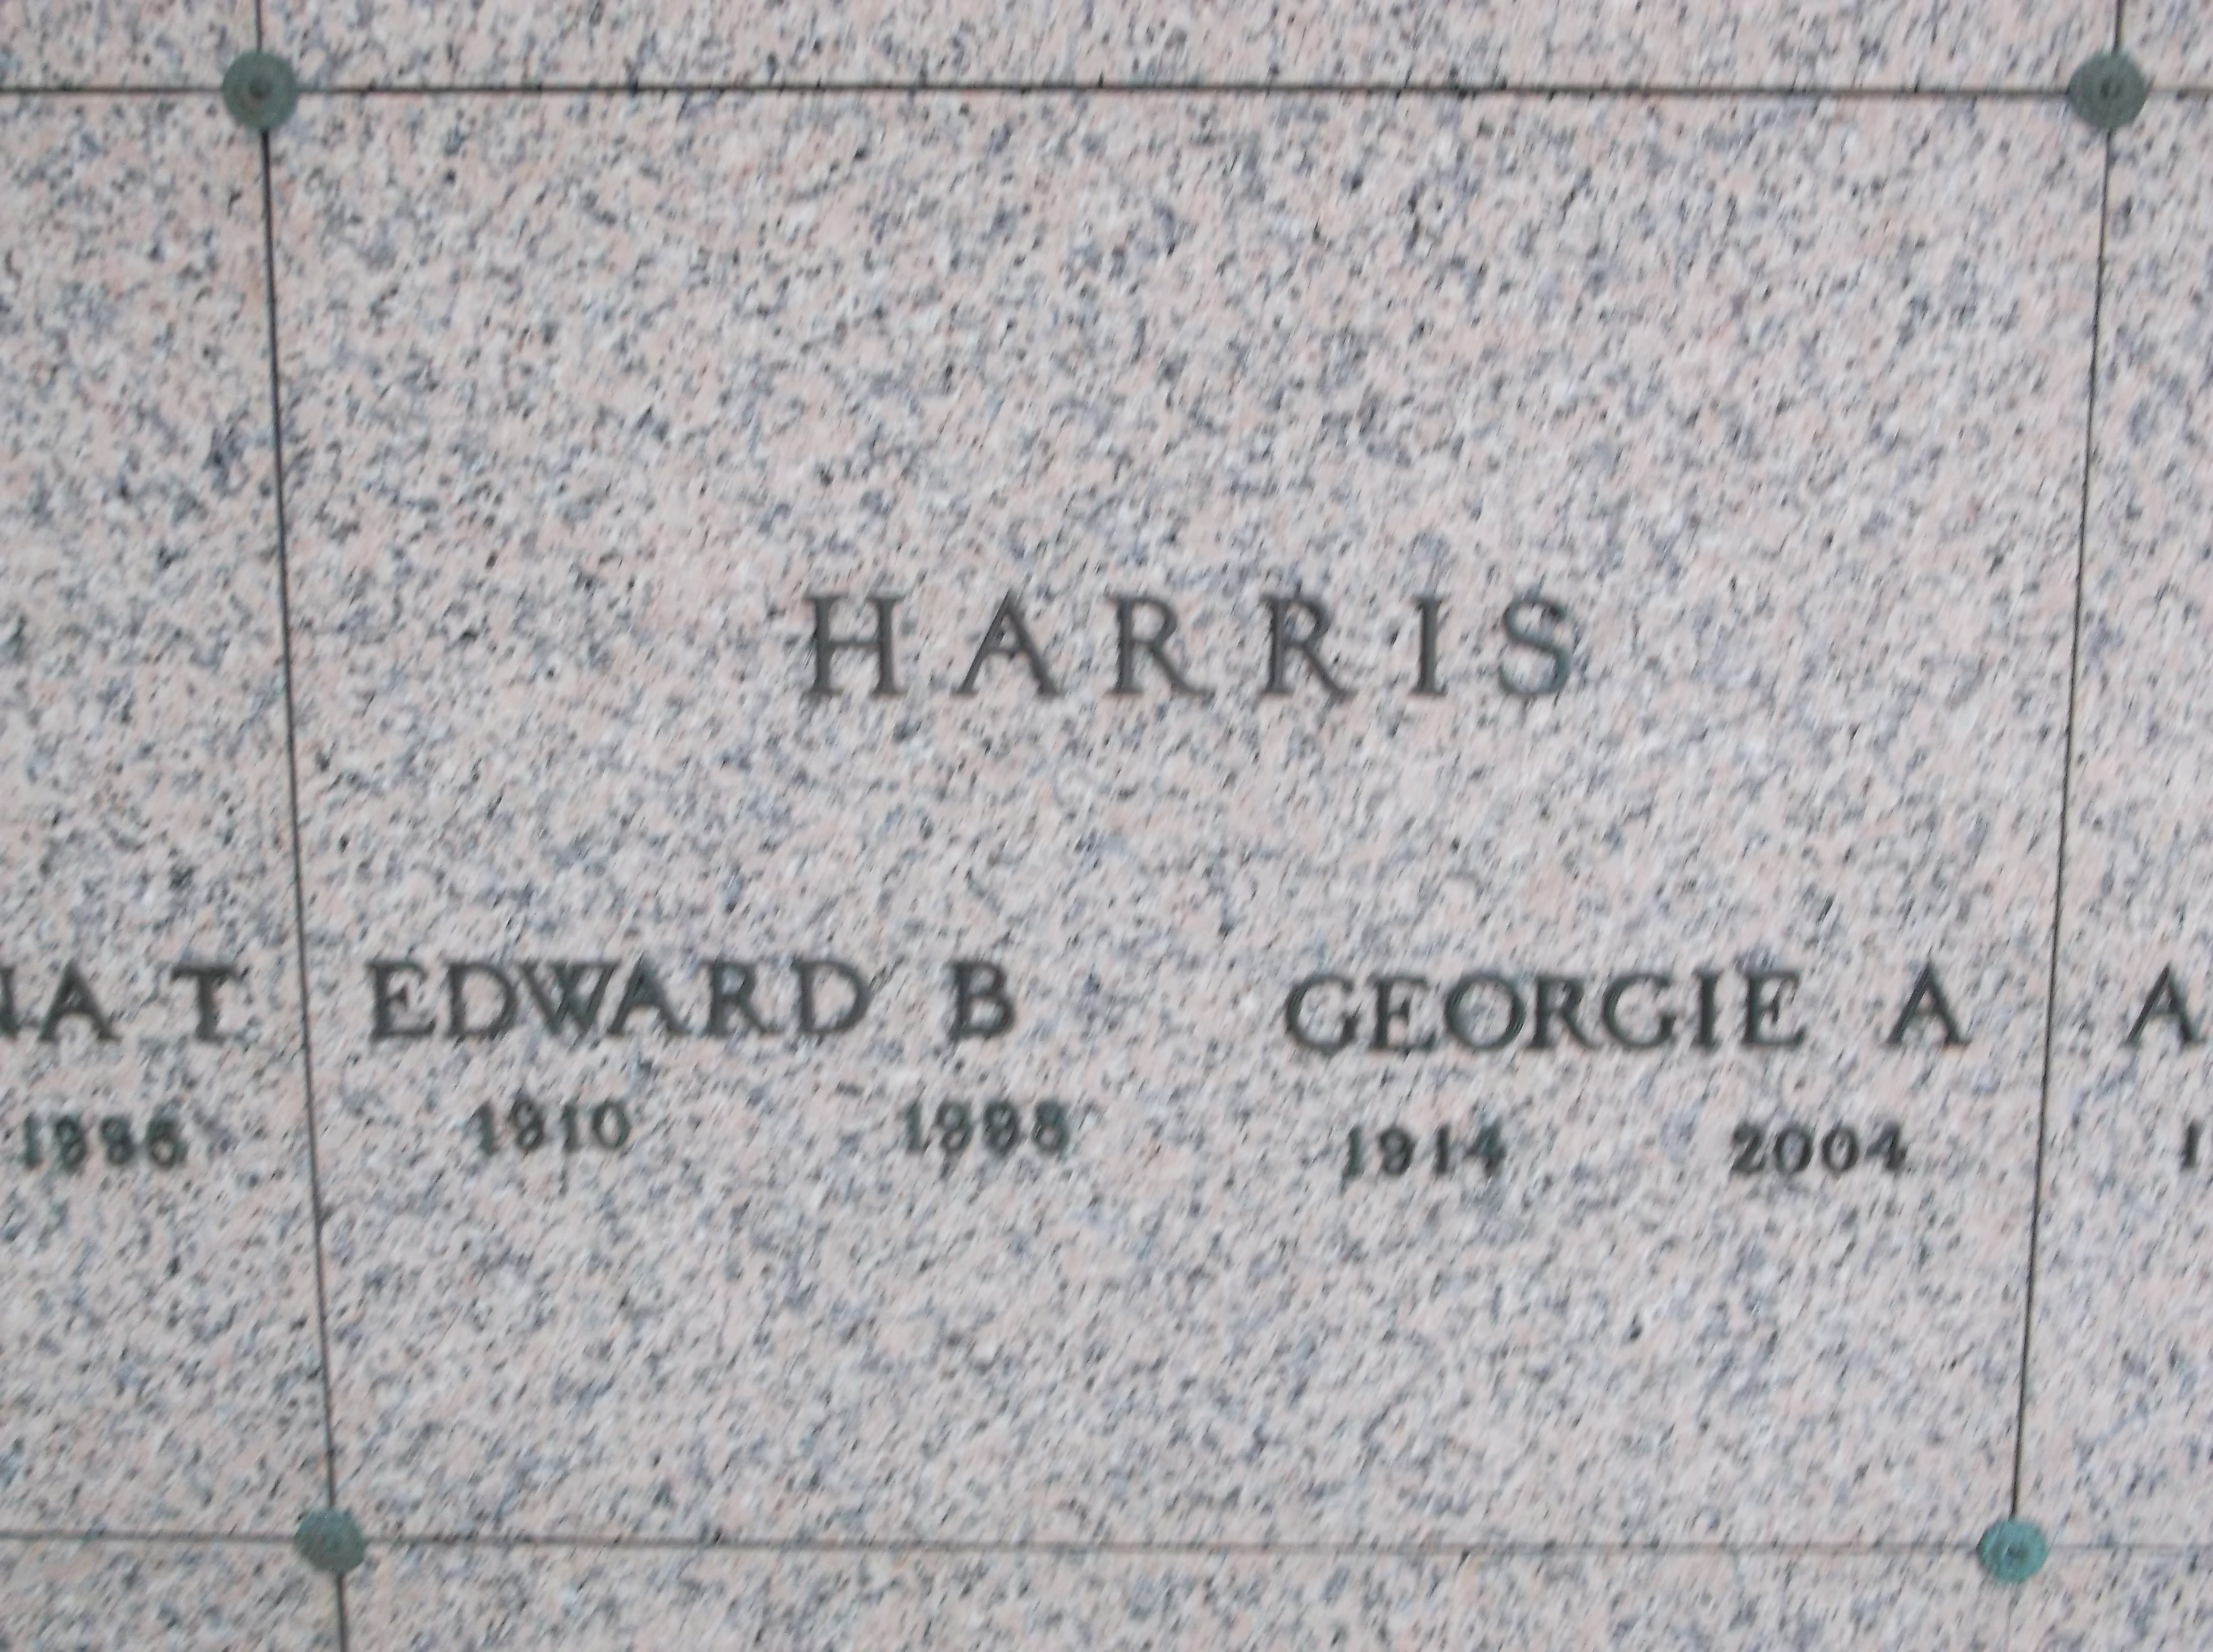 Edward B Harris